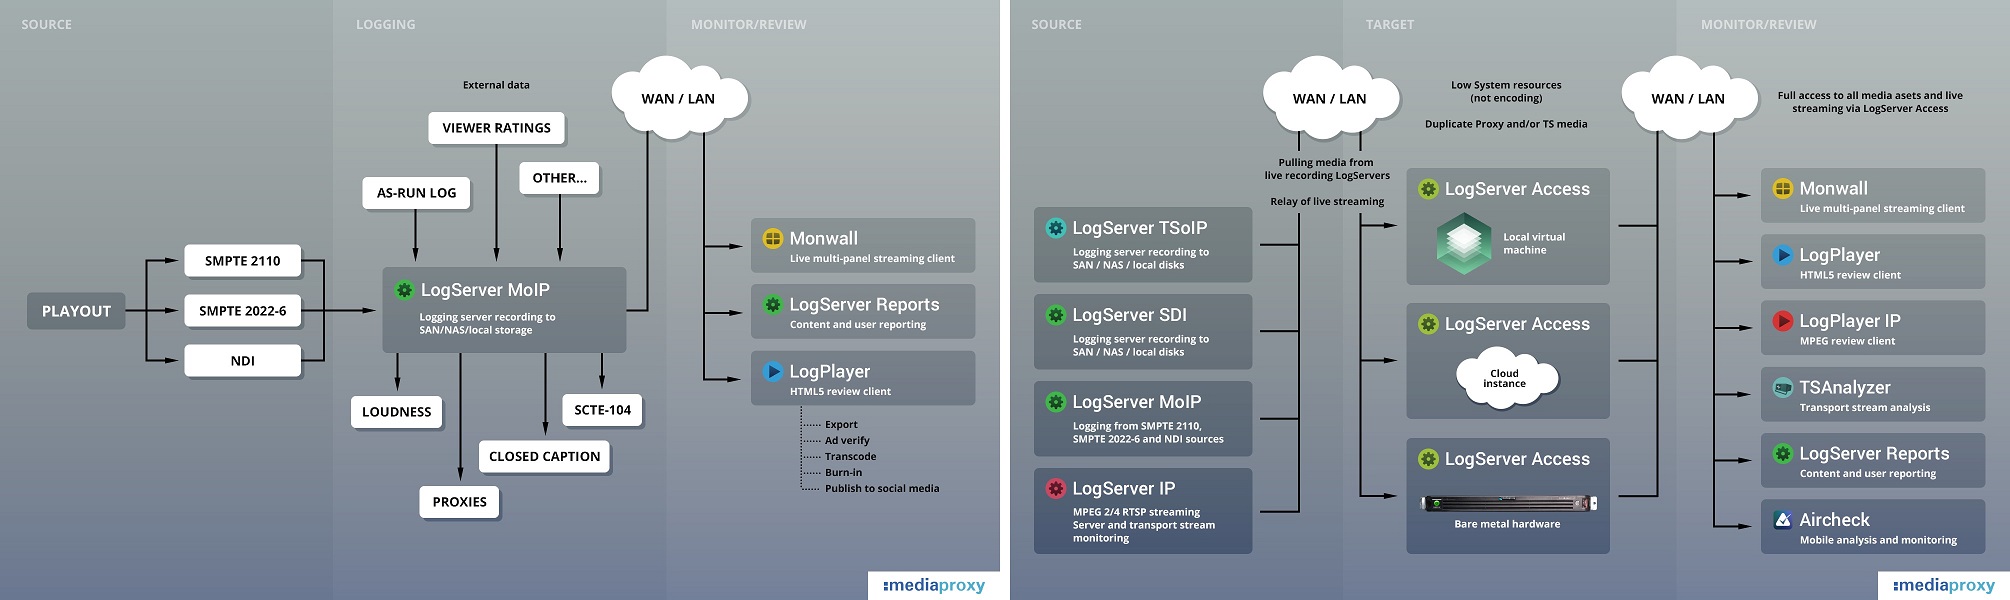 Mediaproxy LogServer Workflow diagrams for NDI